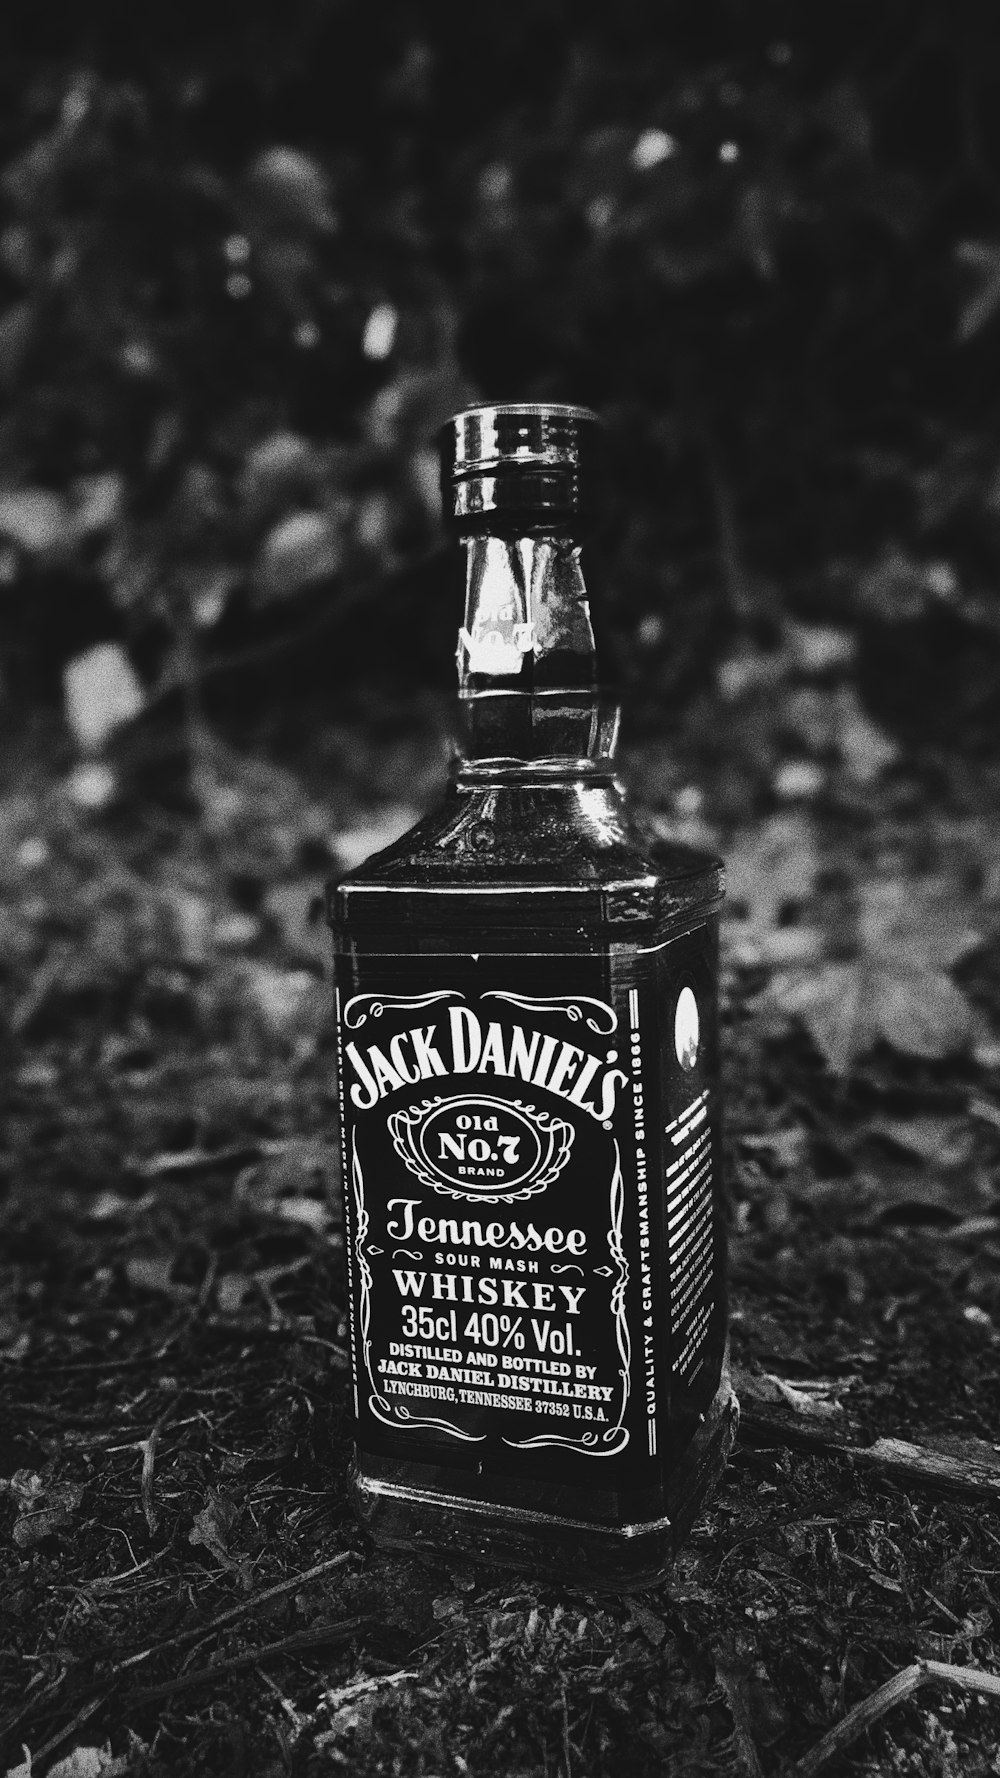 Jack Daniel's Old No 7 Whiskey